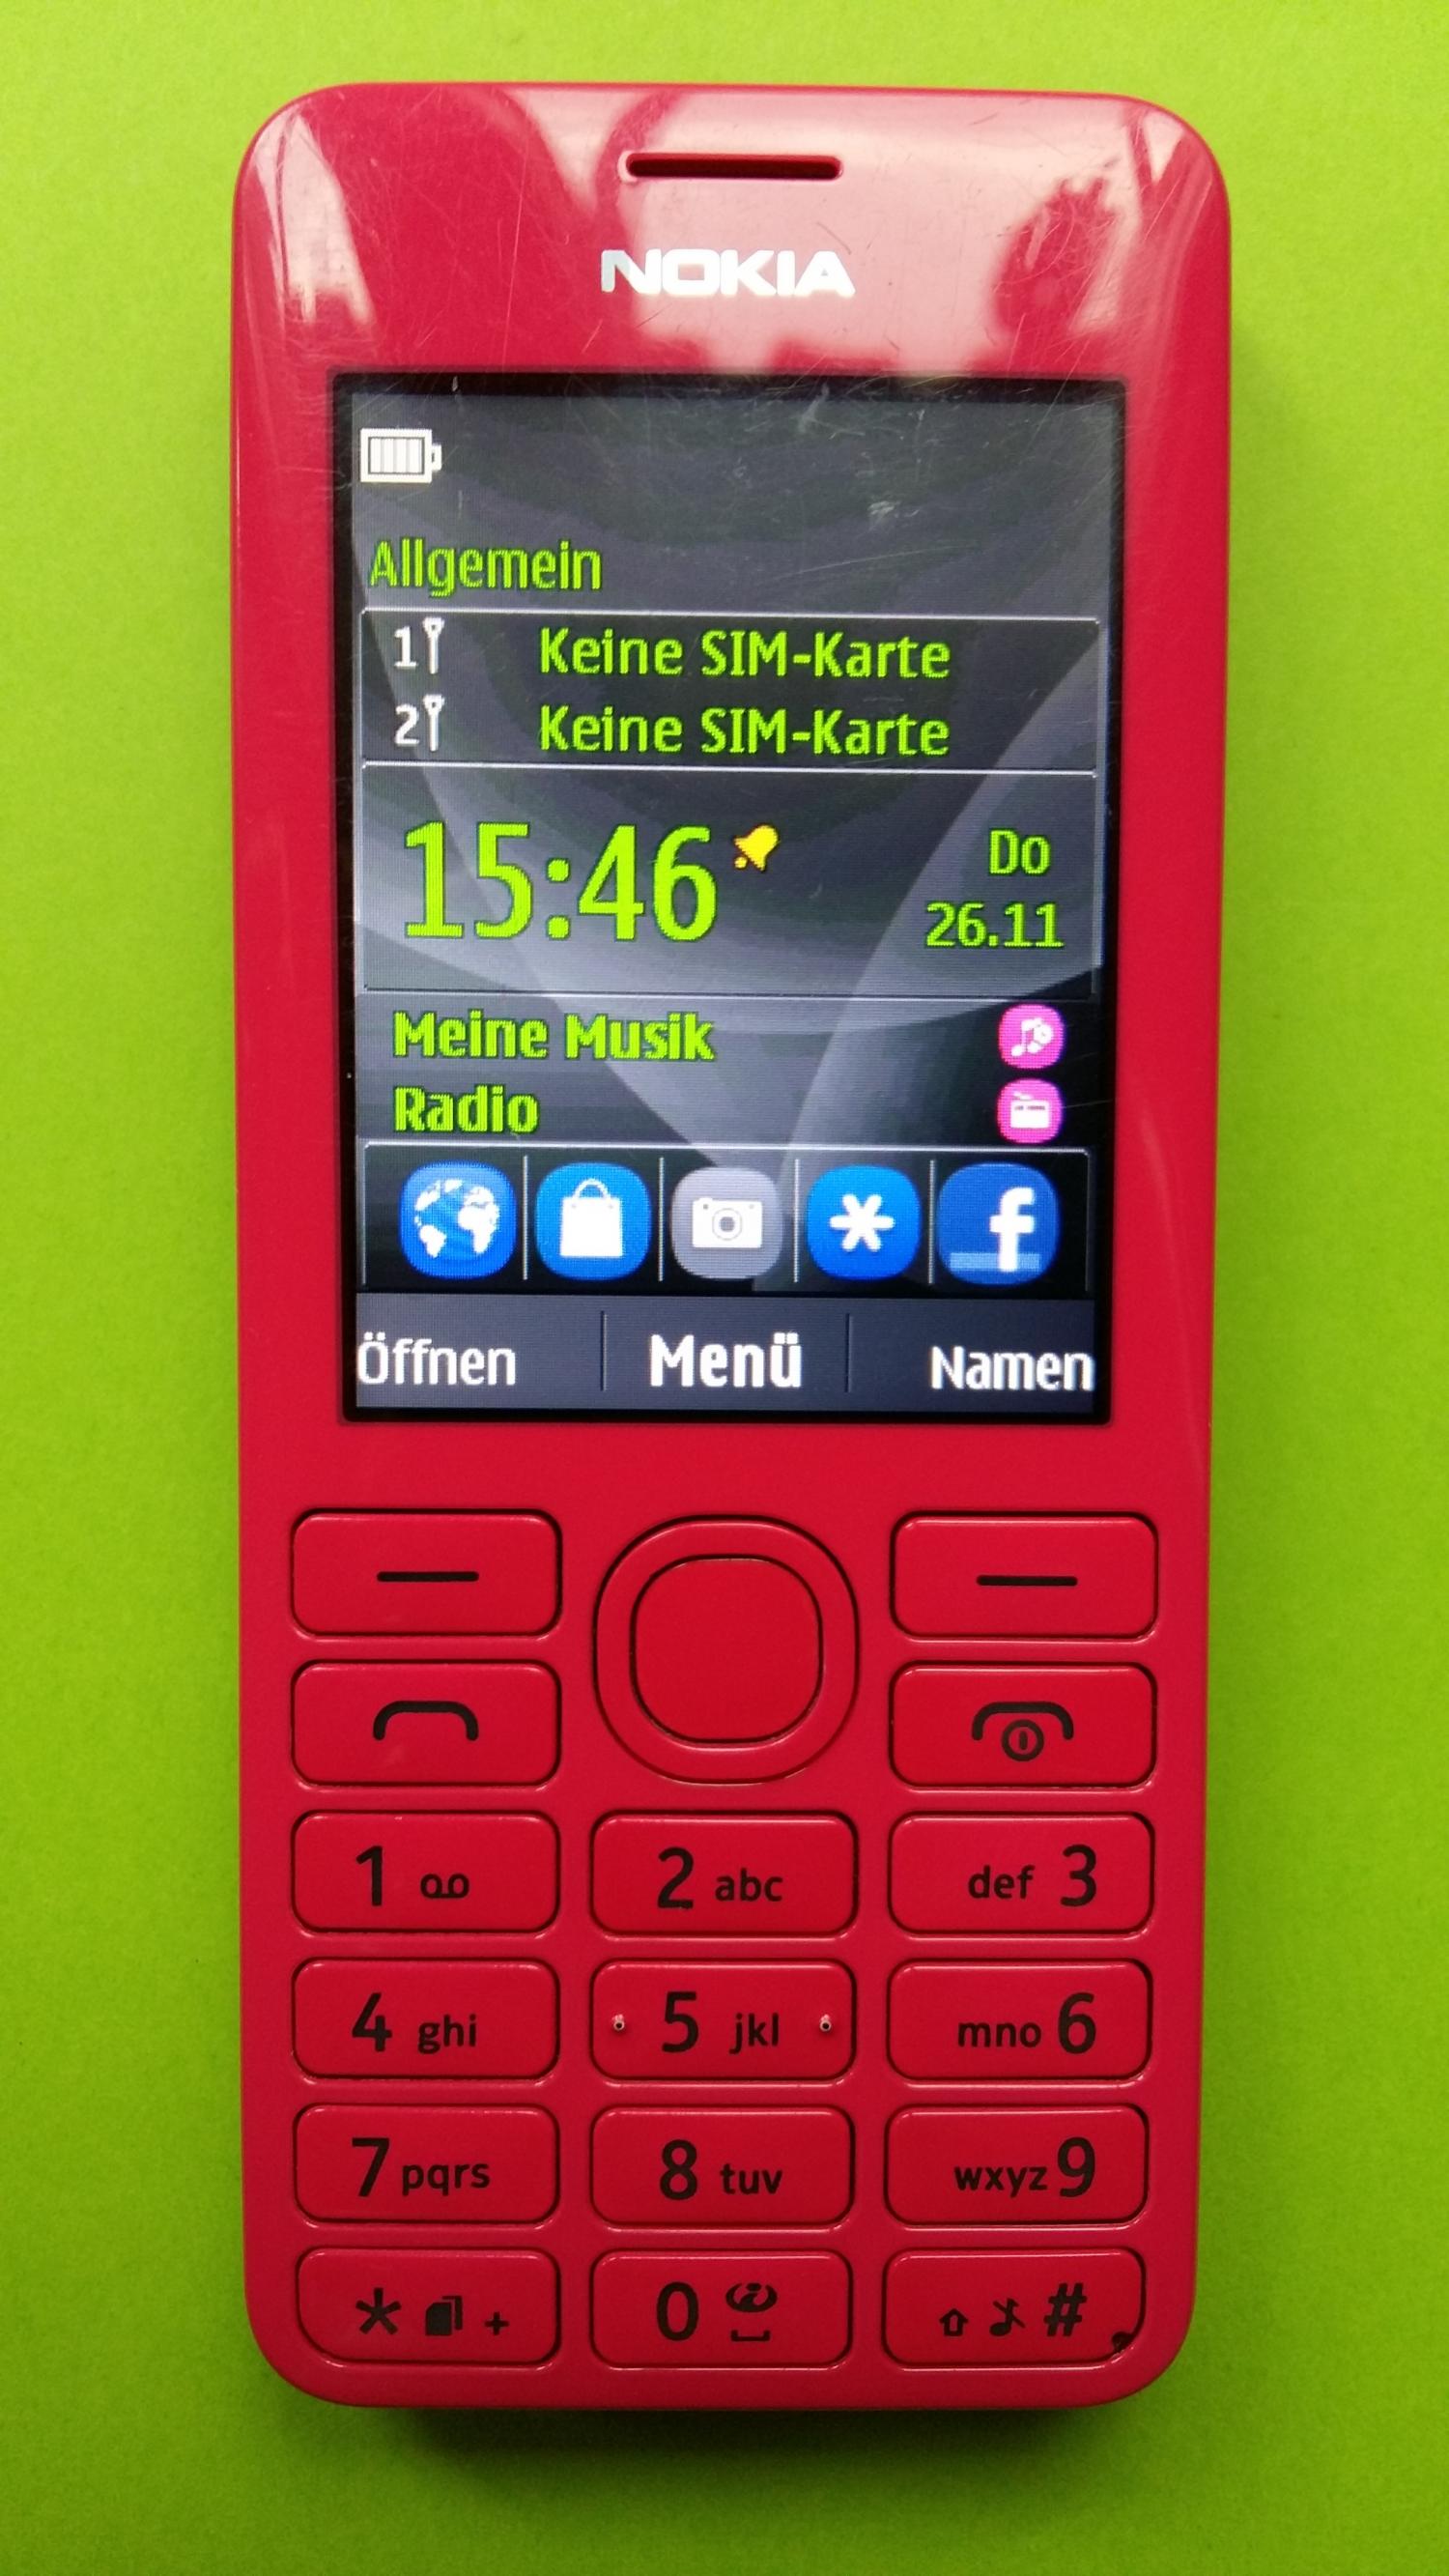 image-7299919-Nokia 206 Asha (1)1.jpg